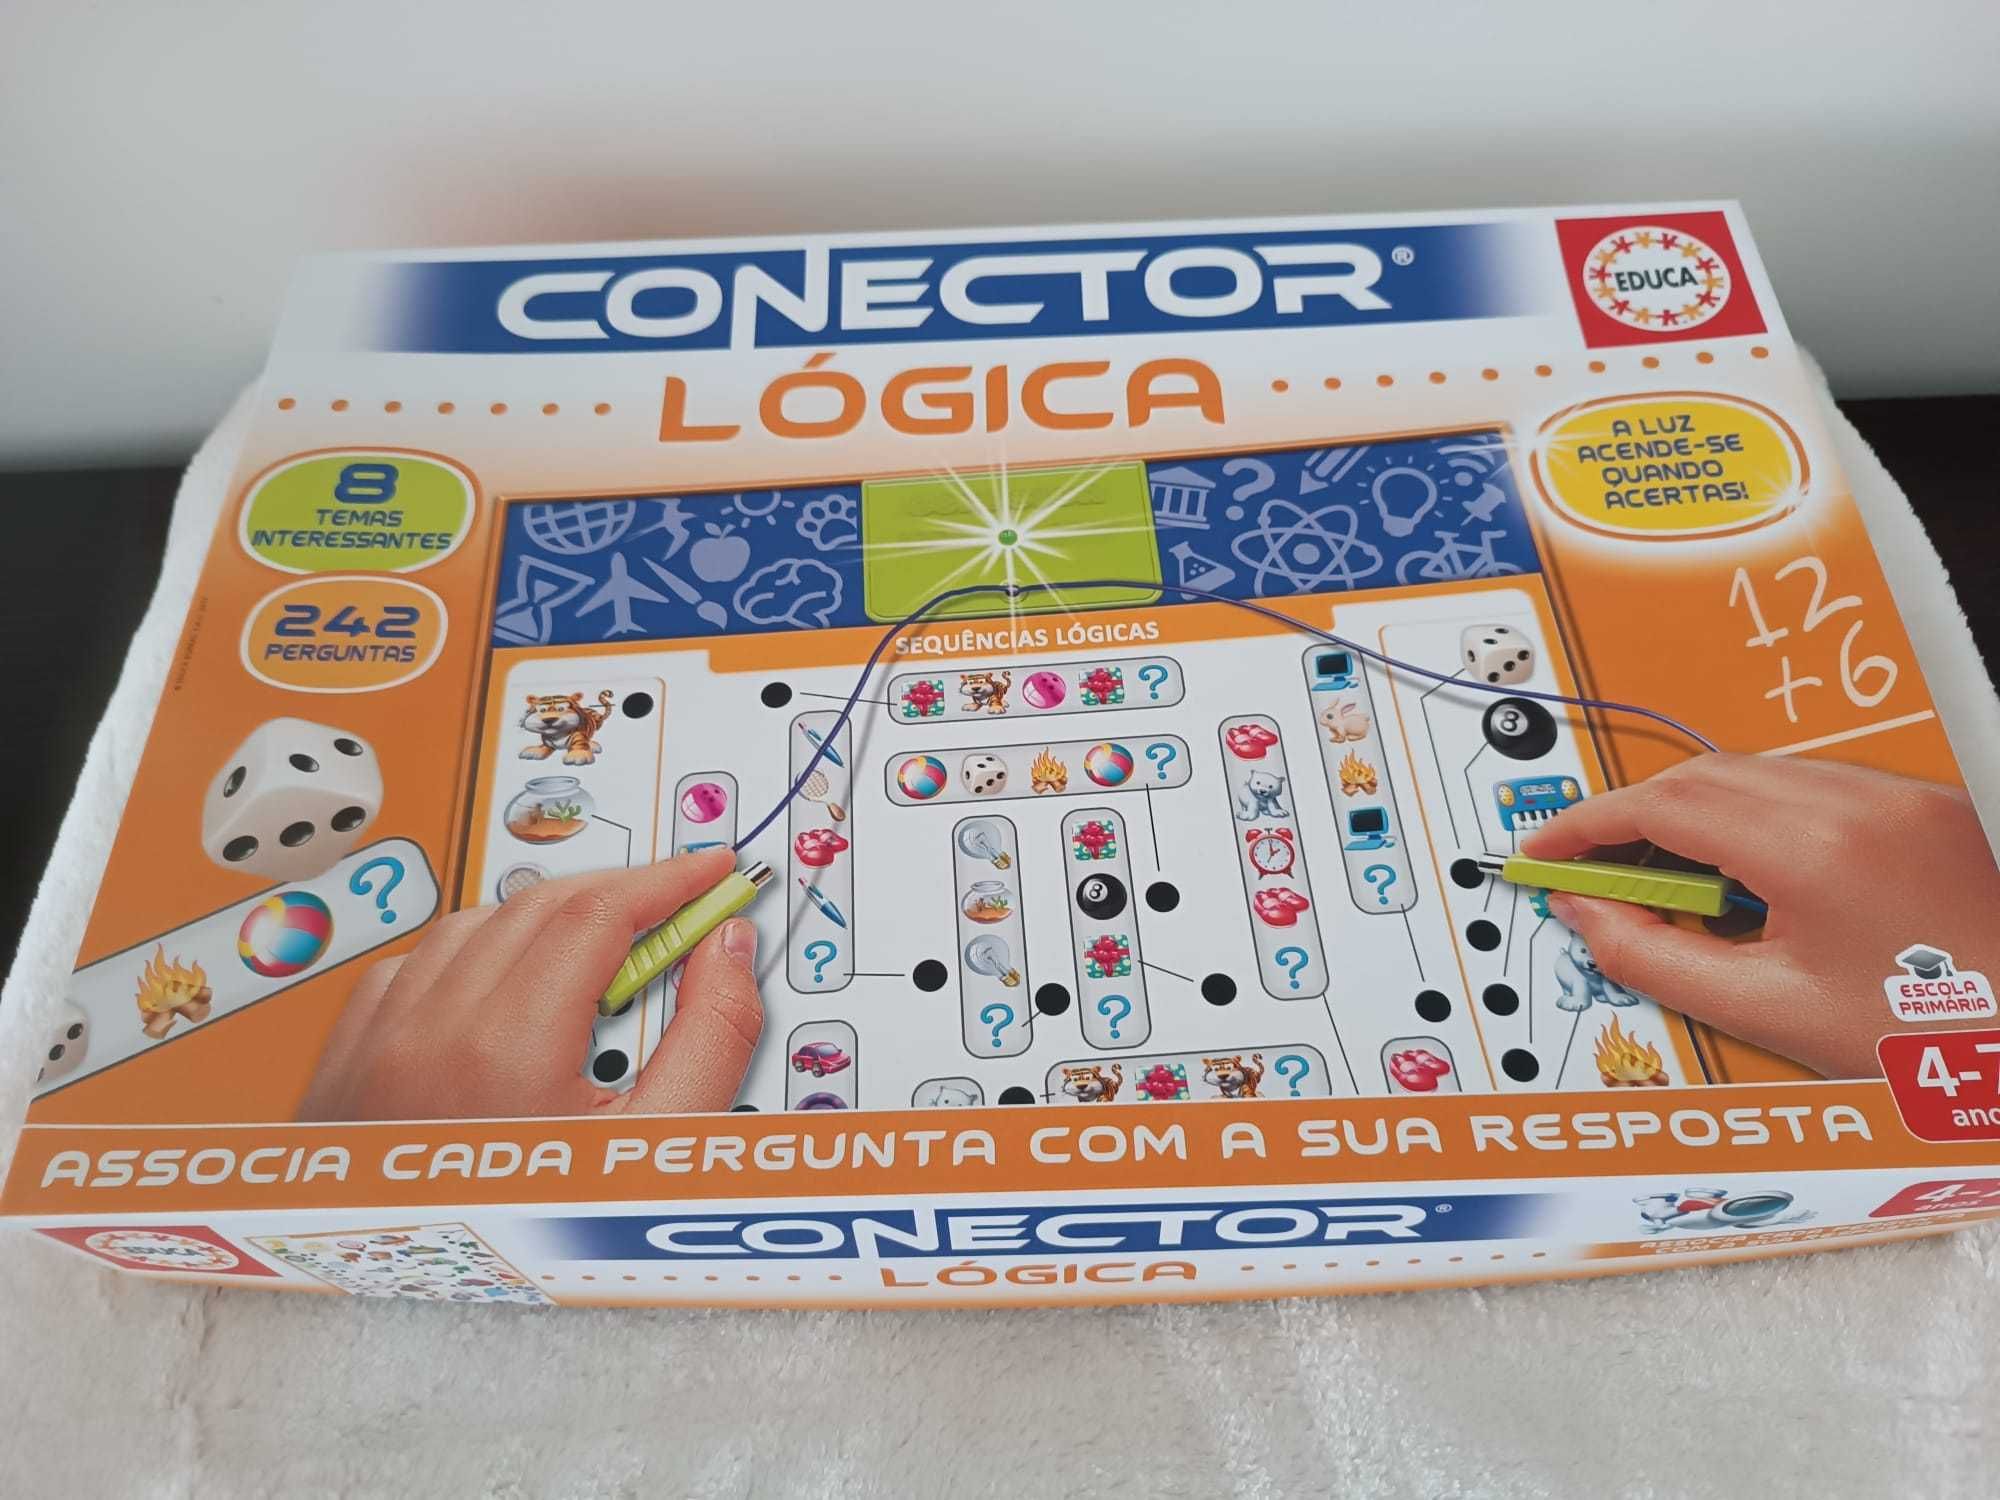 Conector Lógica (EDUCA, 4-7 anos)